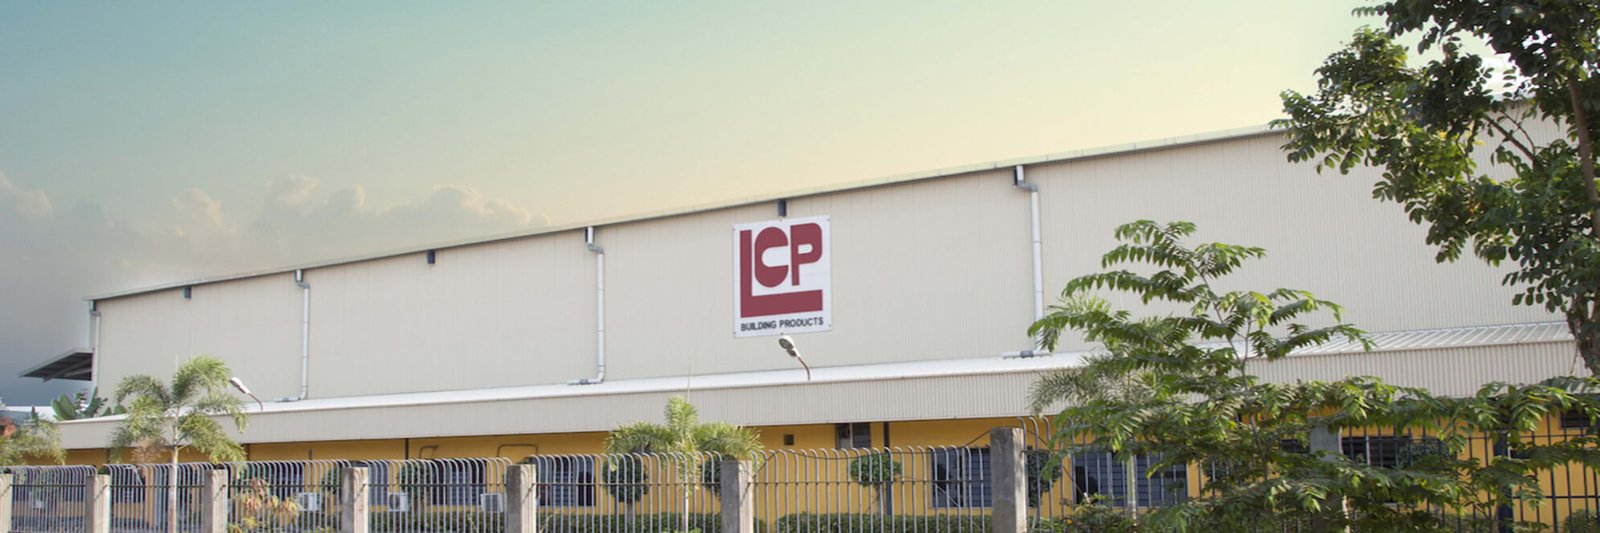 best roof sheet manufacturer in Qatar: LCP Sliders